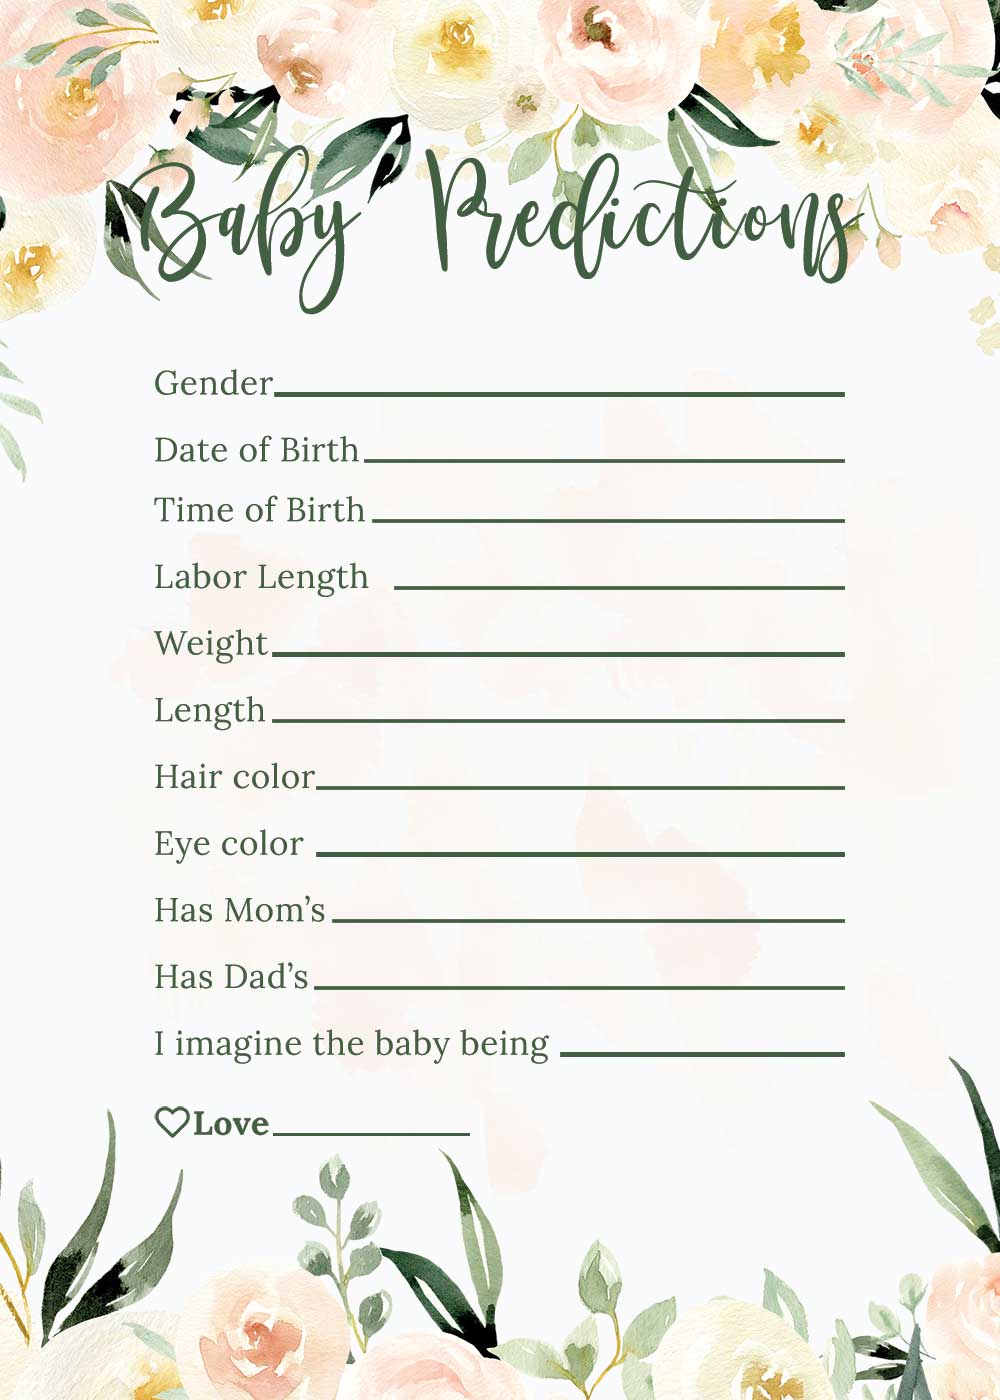 Baby Shower Baby prediction card - Blush theme